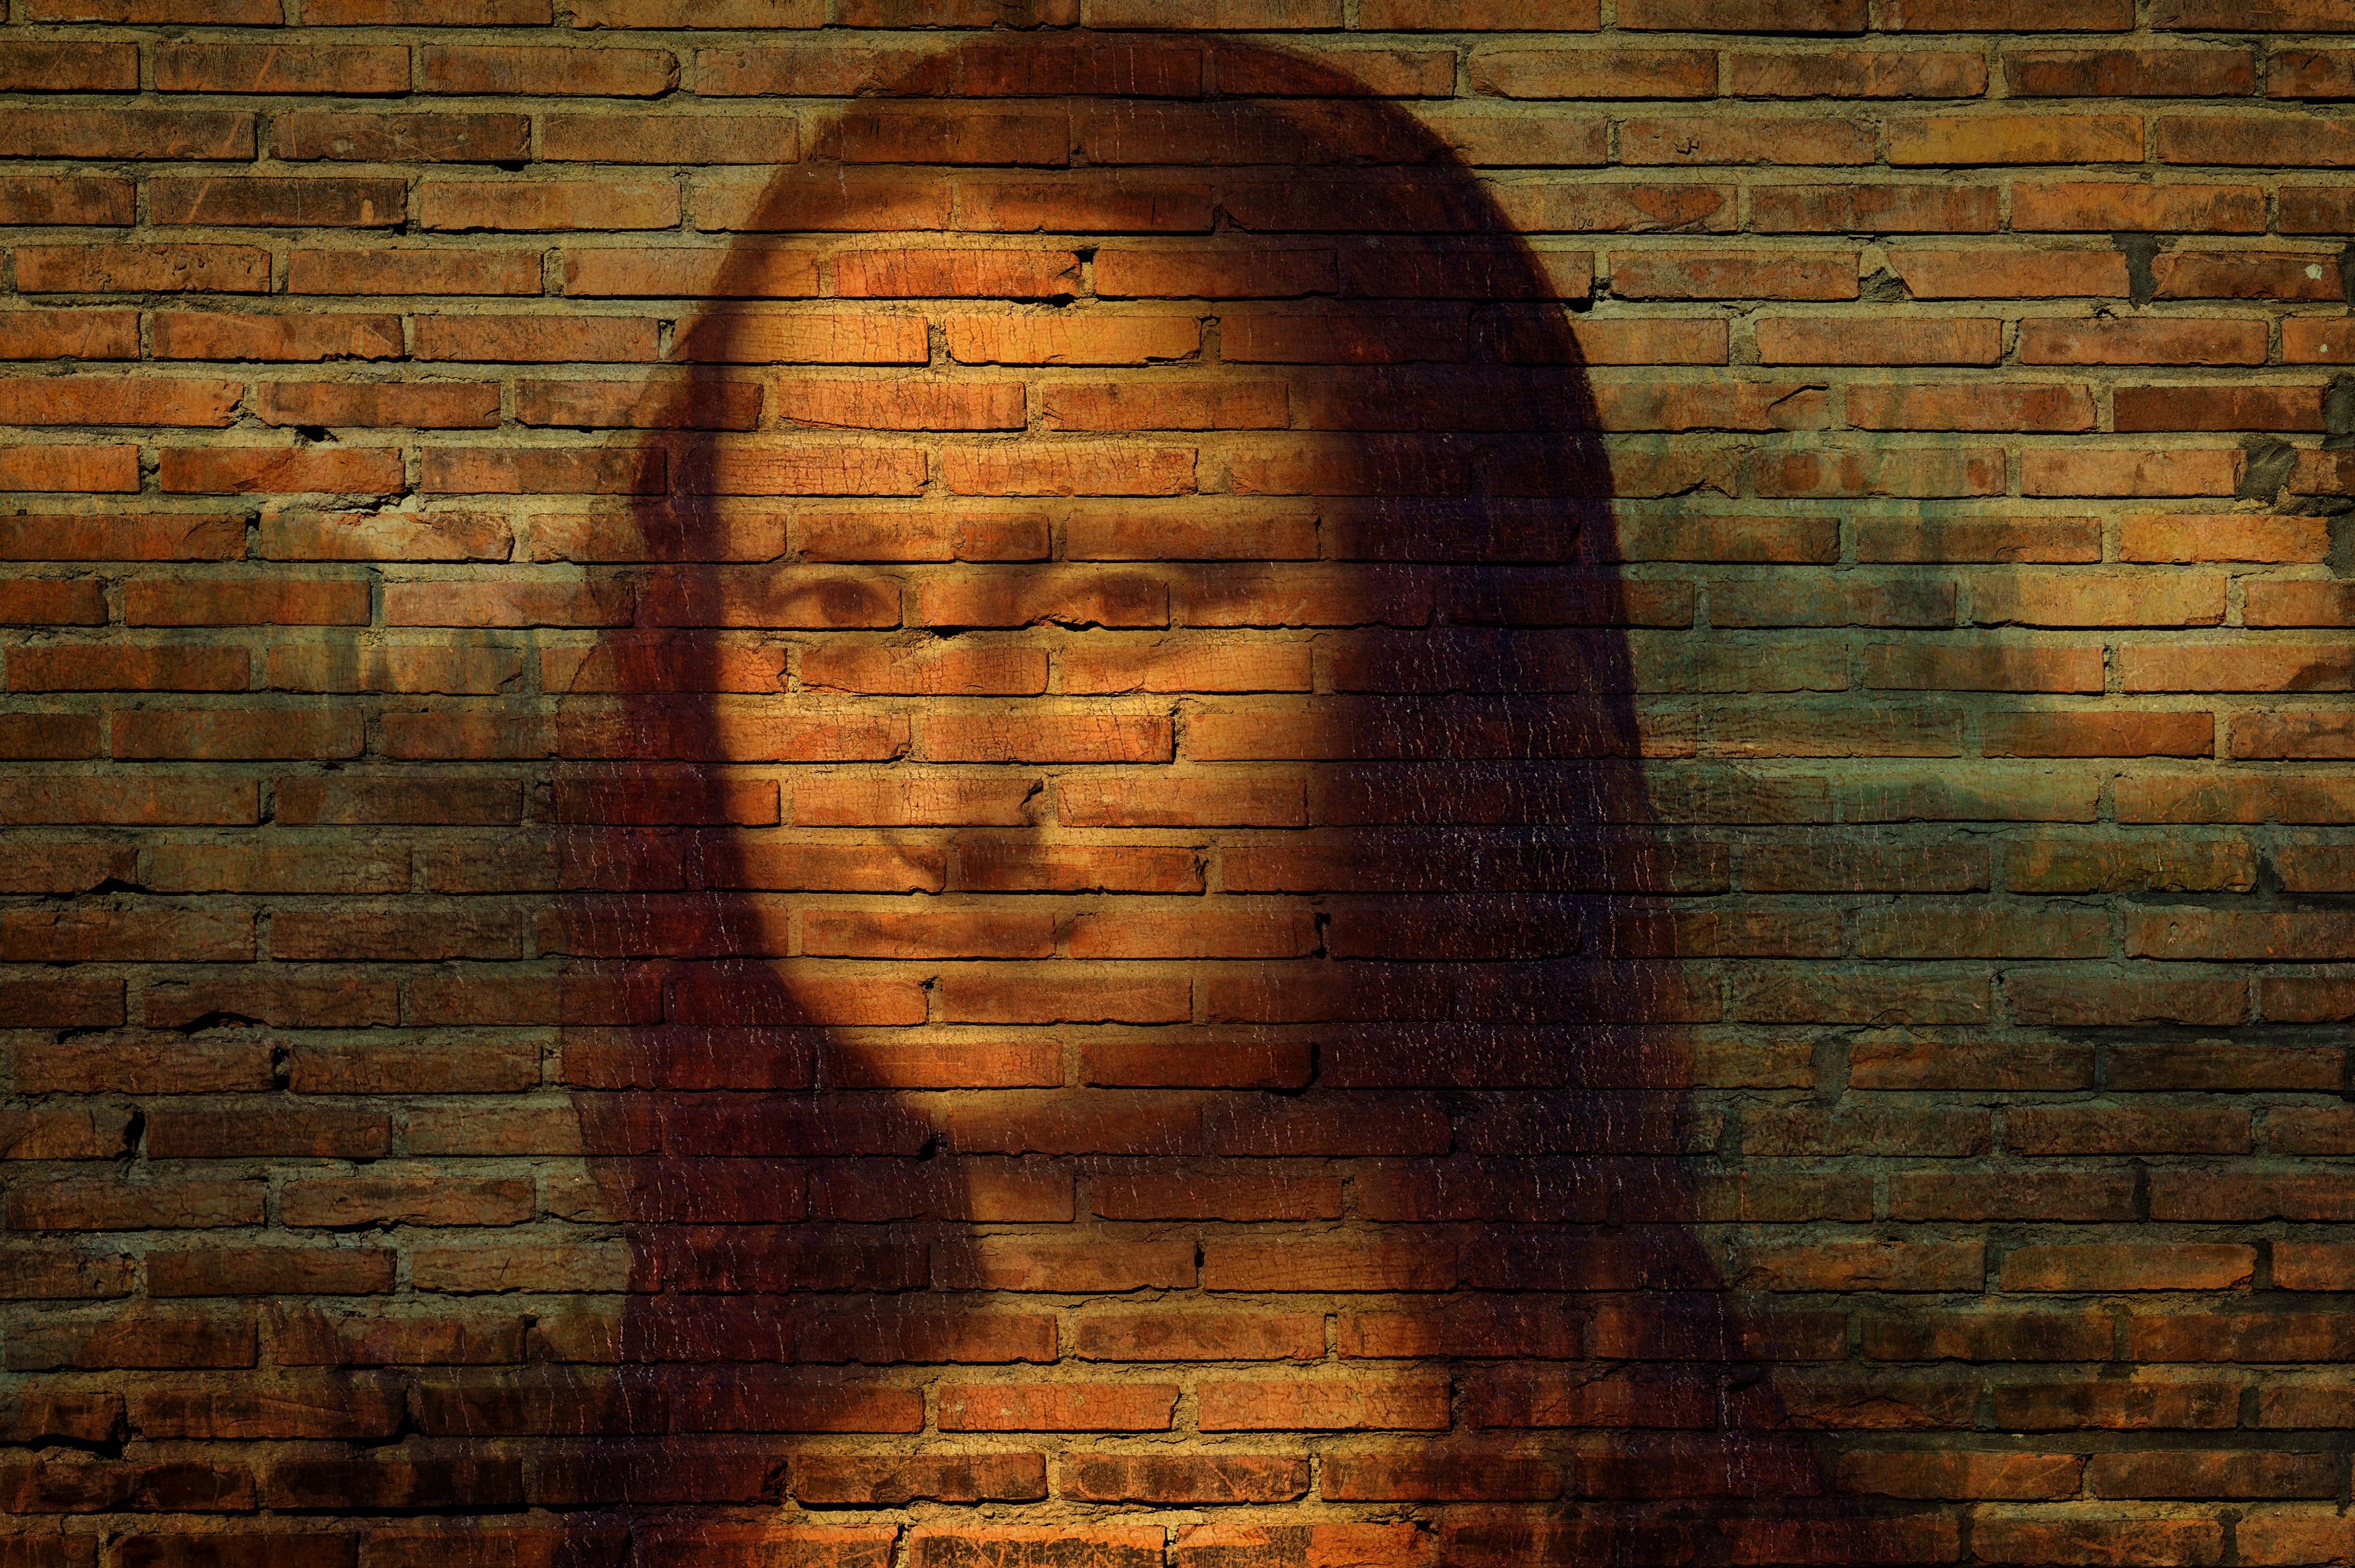 Monalisa painting on brick wall at daytime, mona lisa, portrait